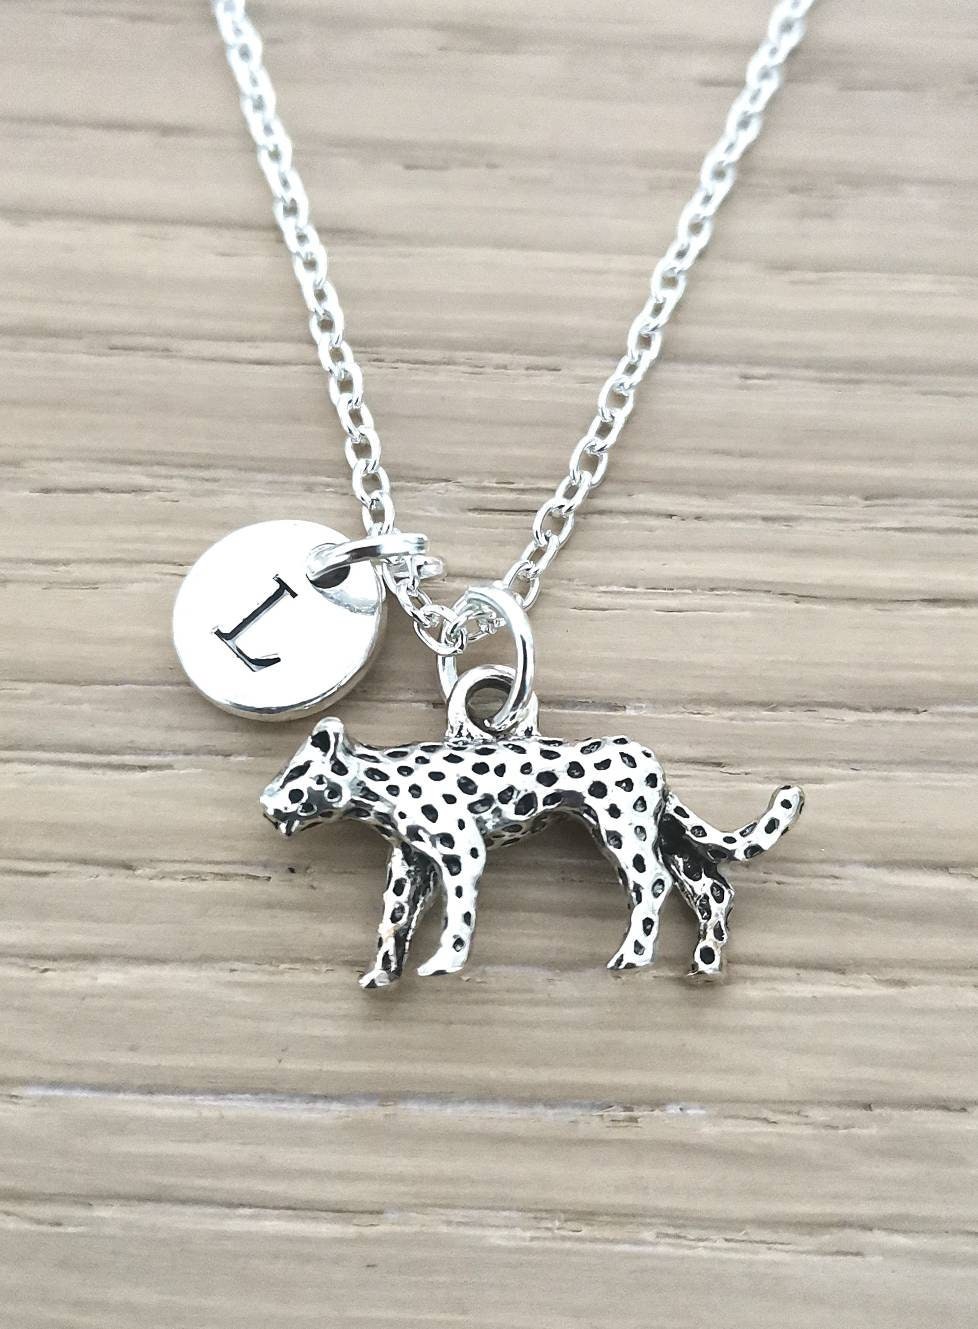 Cheetah, cheetah necklace, cheetah gifts, cheetah gifts, cheetah charm necklace, cheetah jewelry, gifts cheetah, animal, animal charm gifts